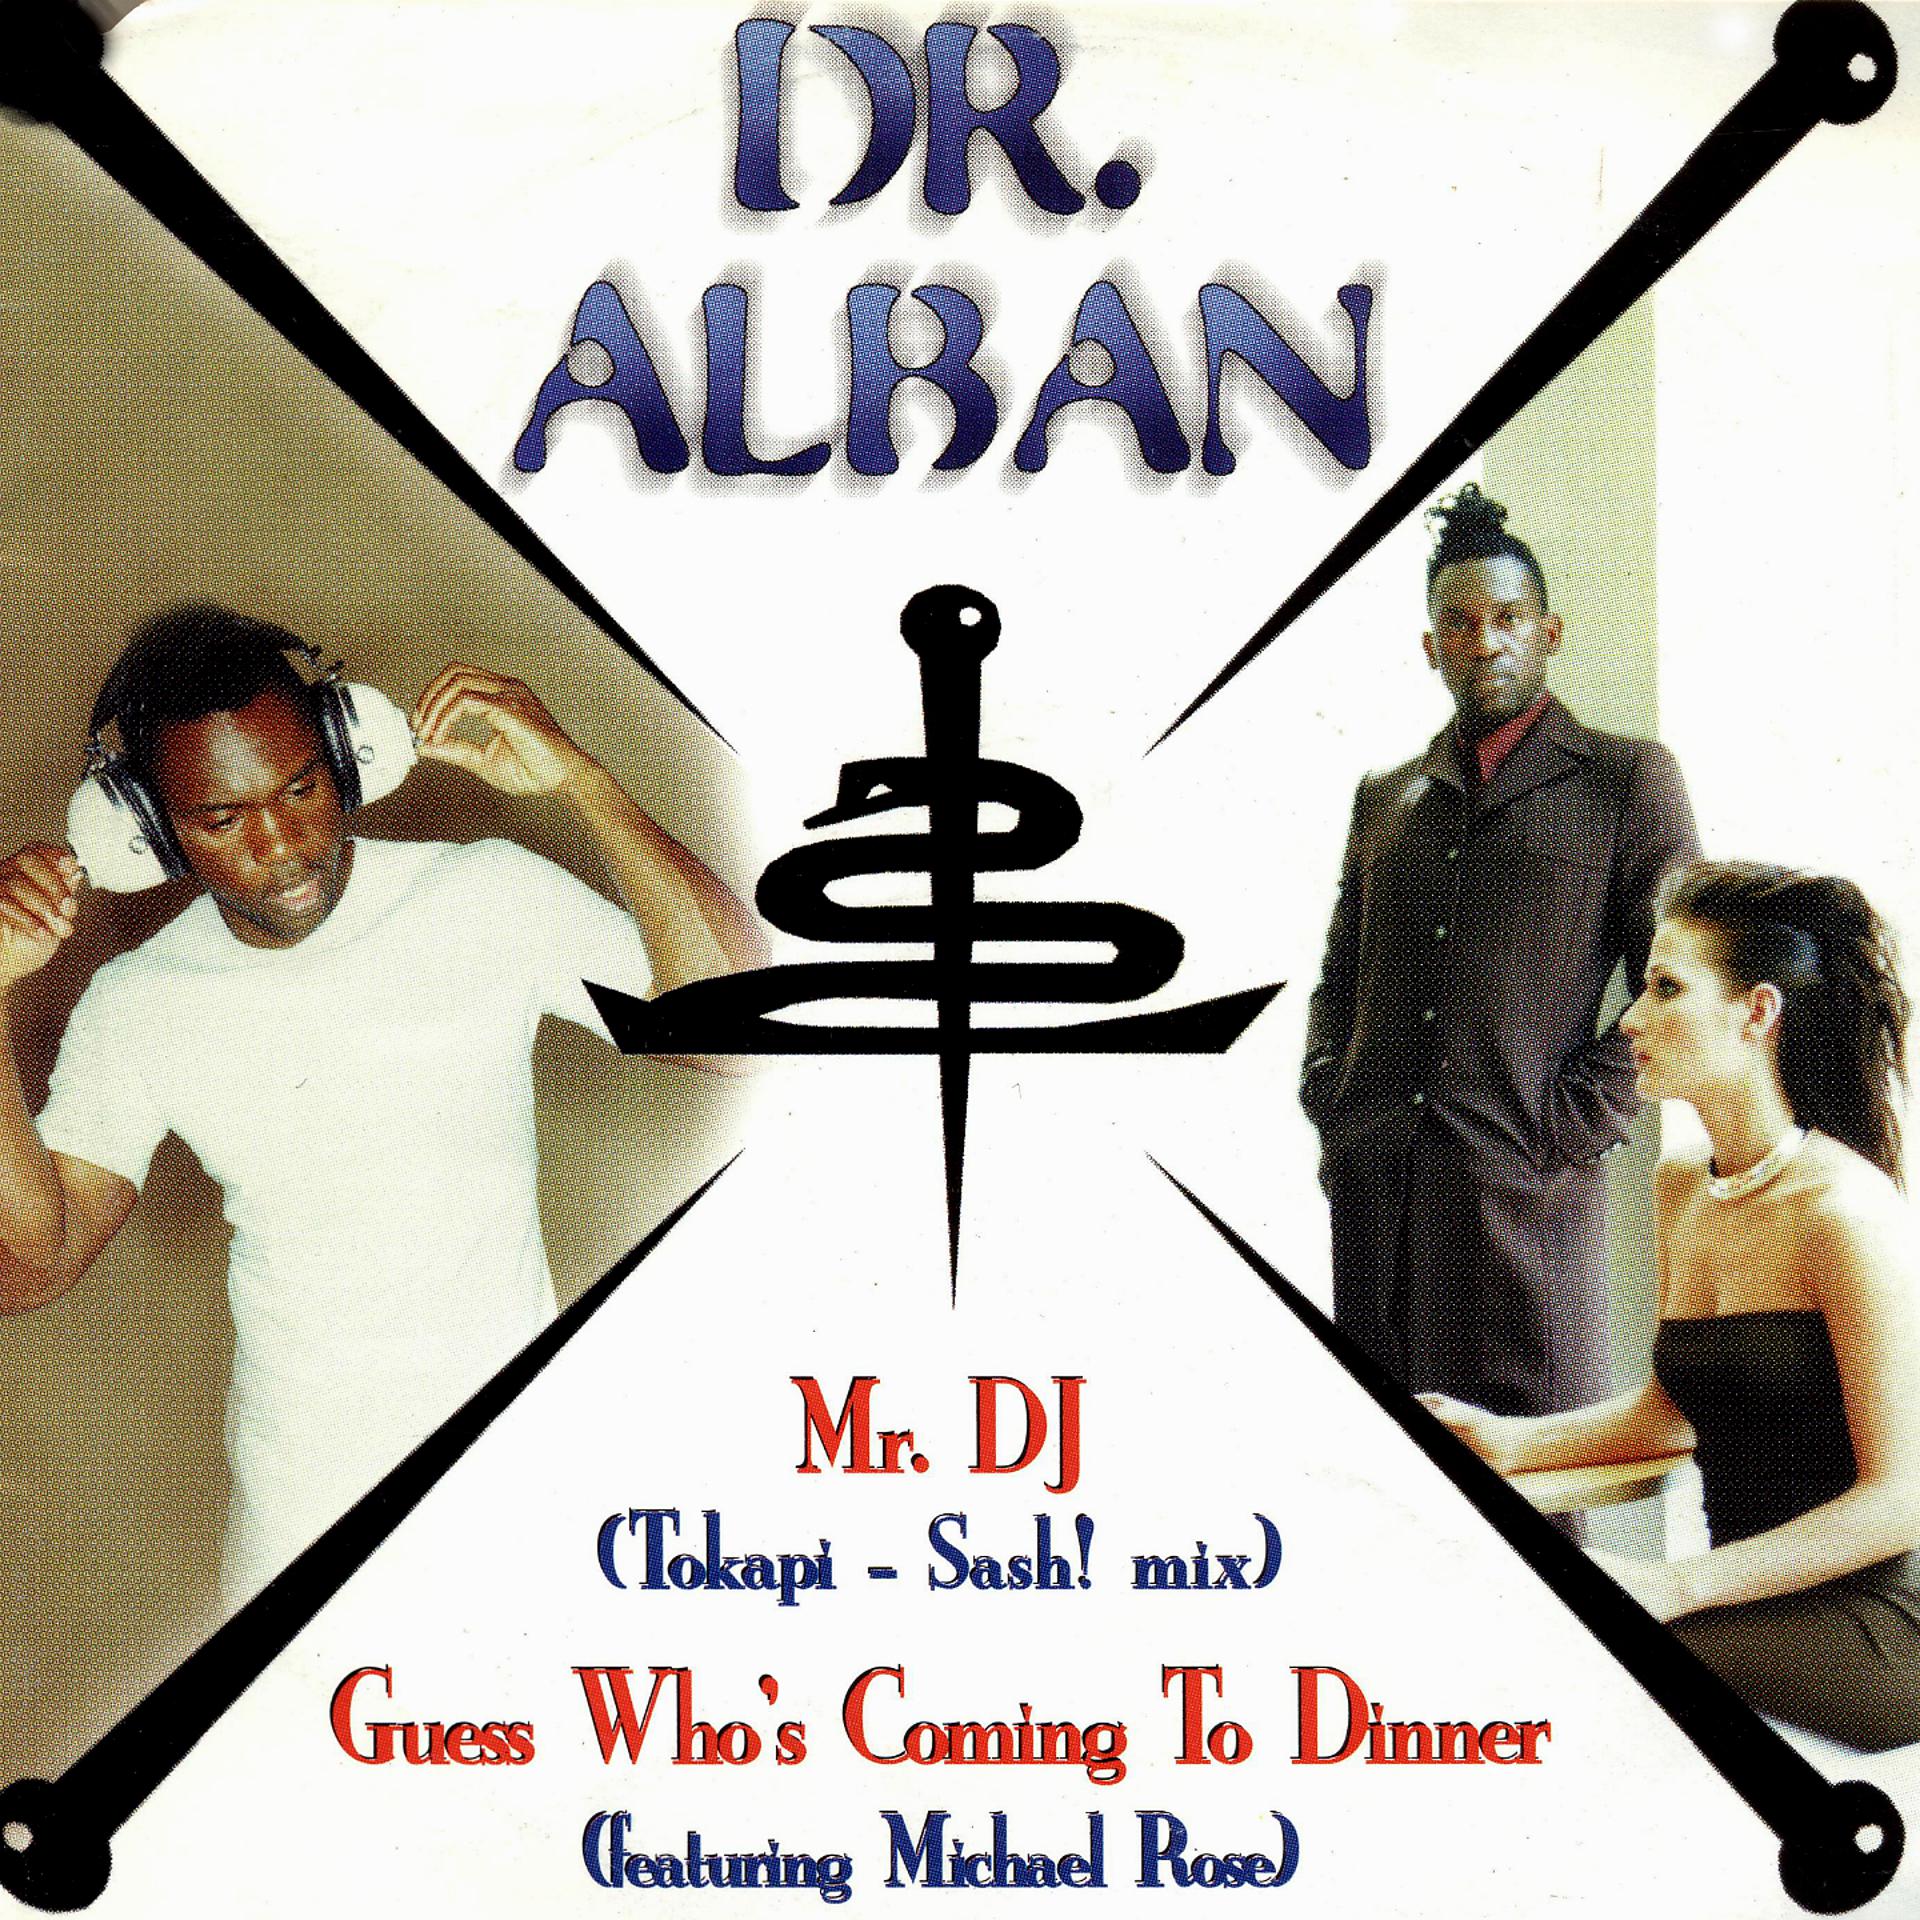 Dr Alban albums. Dr Alban альбомы. Dr Alban Mr DJ. Dr Alban Mr DJ слушать. Оне лов доктор